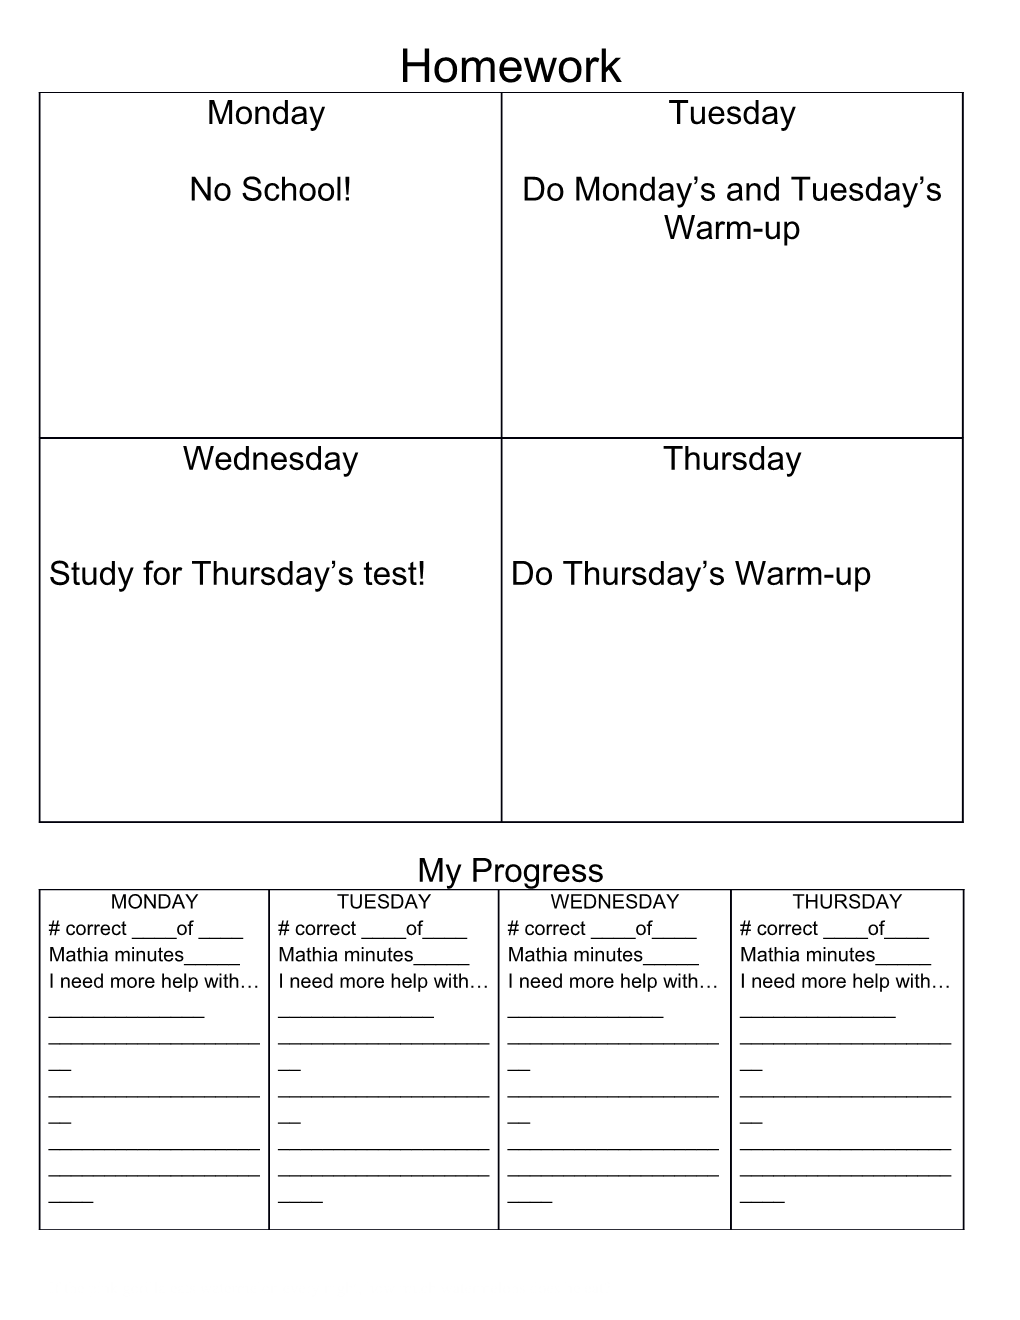 Weekly Homework Sheet s12